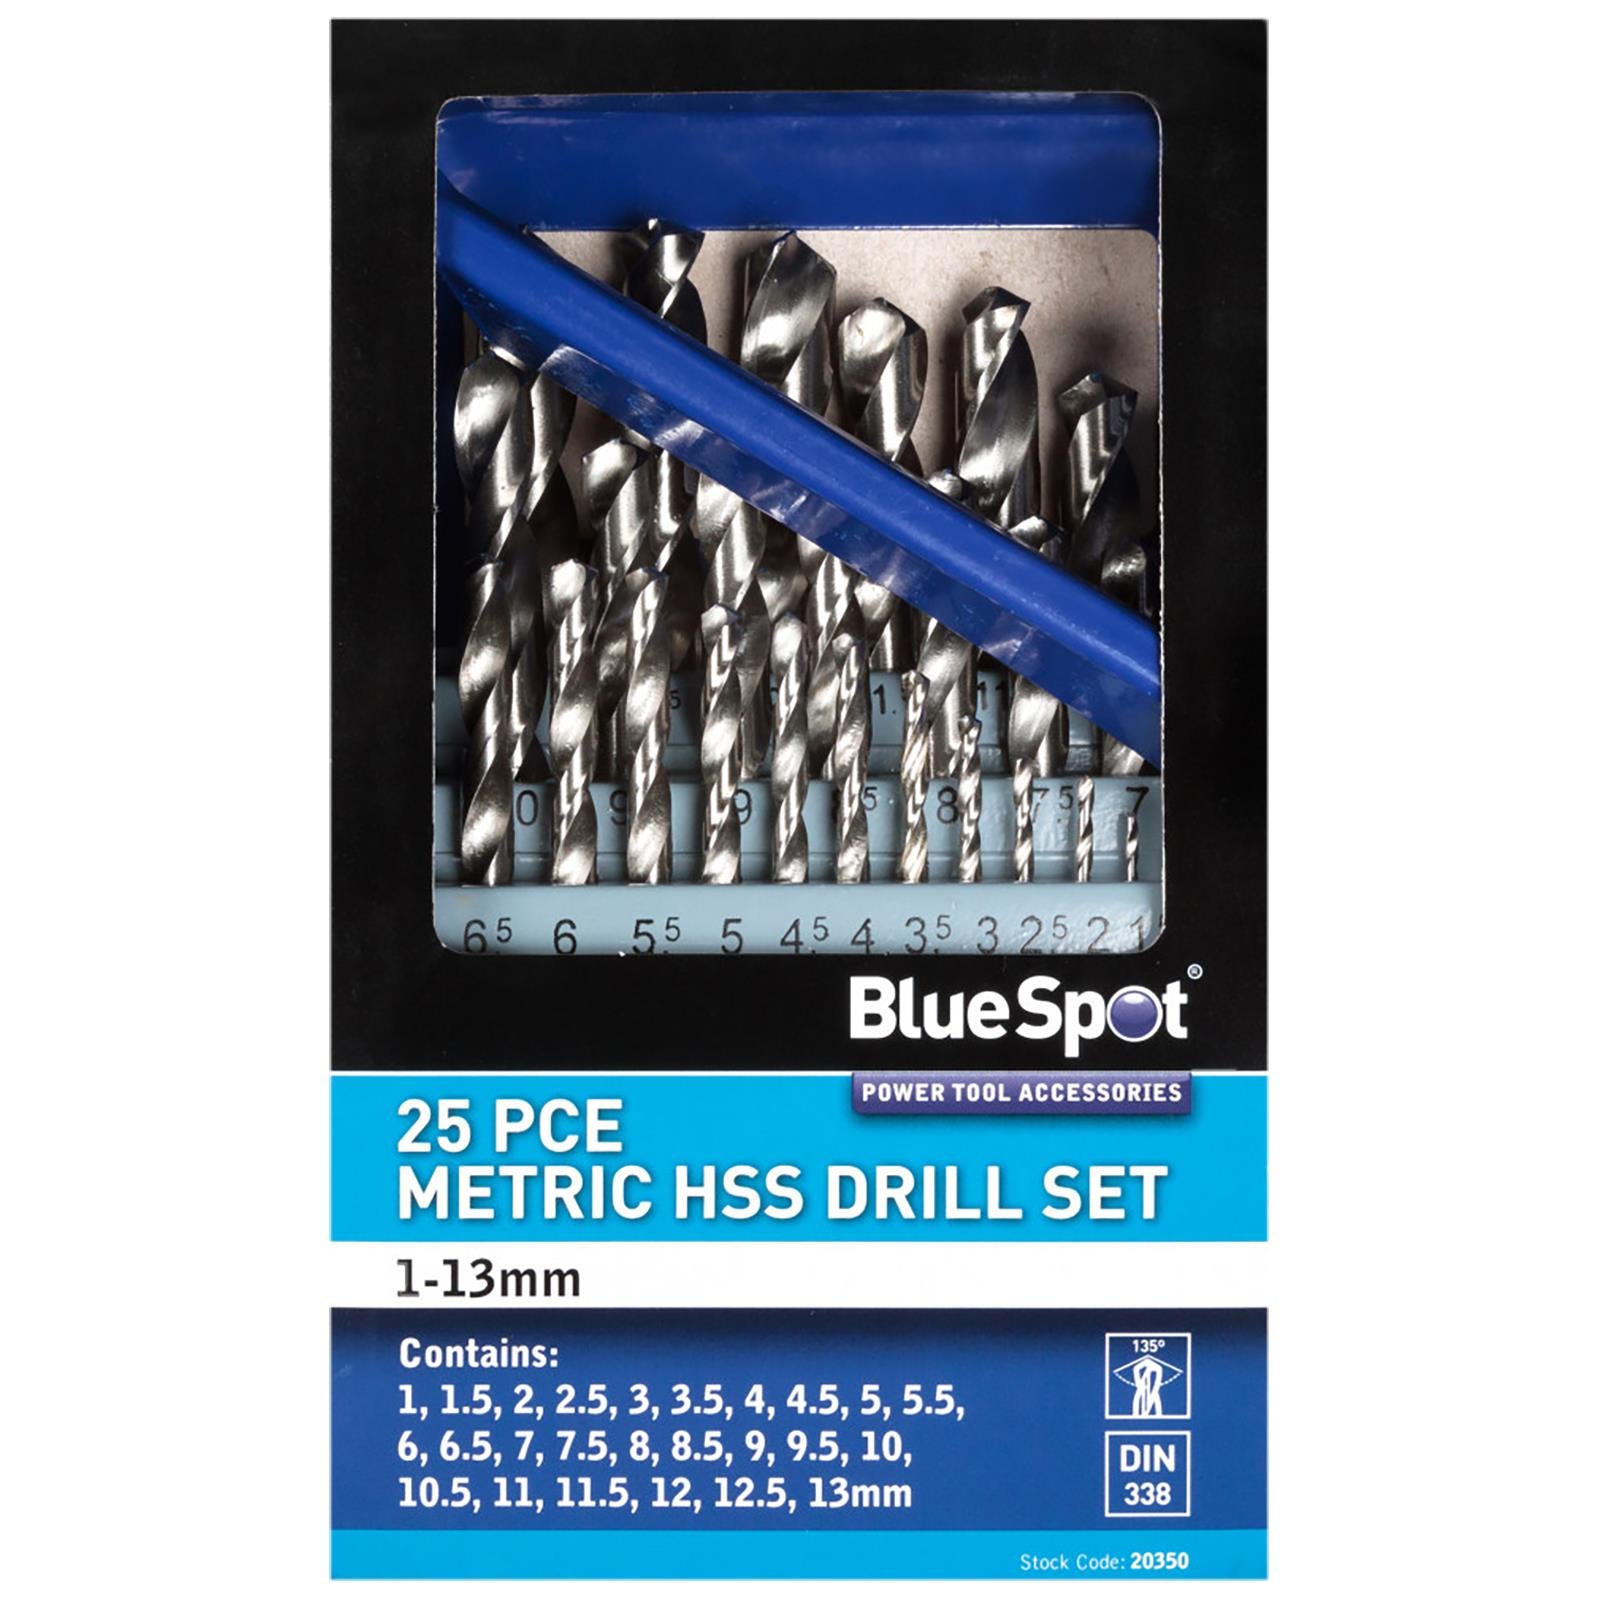 BlueSpot HSS Drill Bit Set 25 Piece Metric in Metal Case 1-13mm